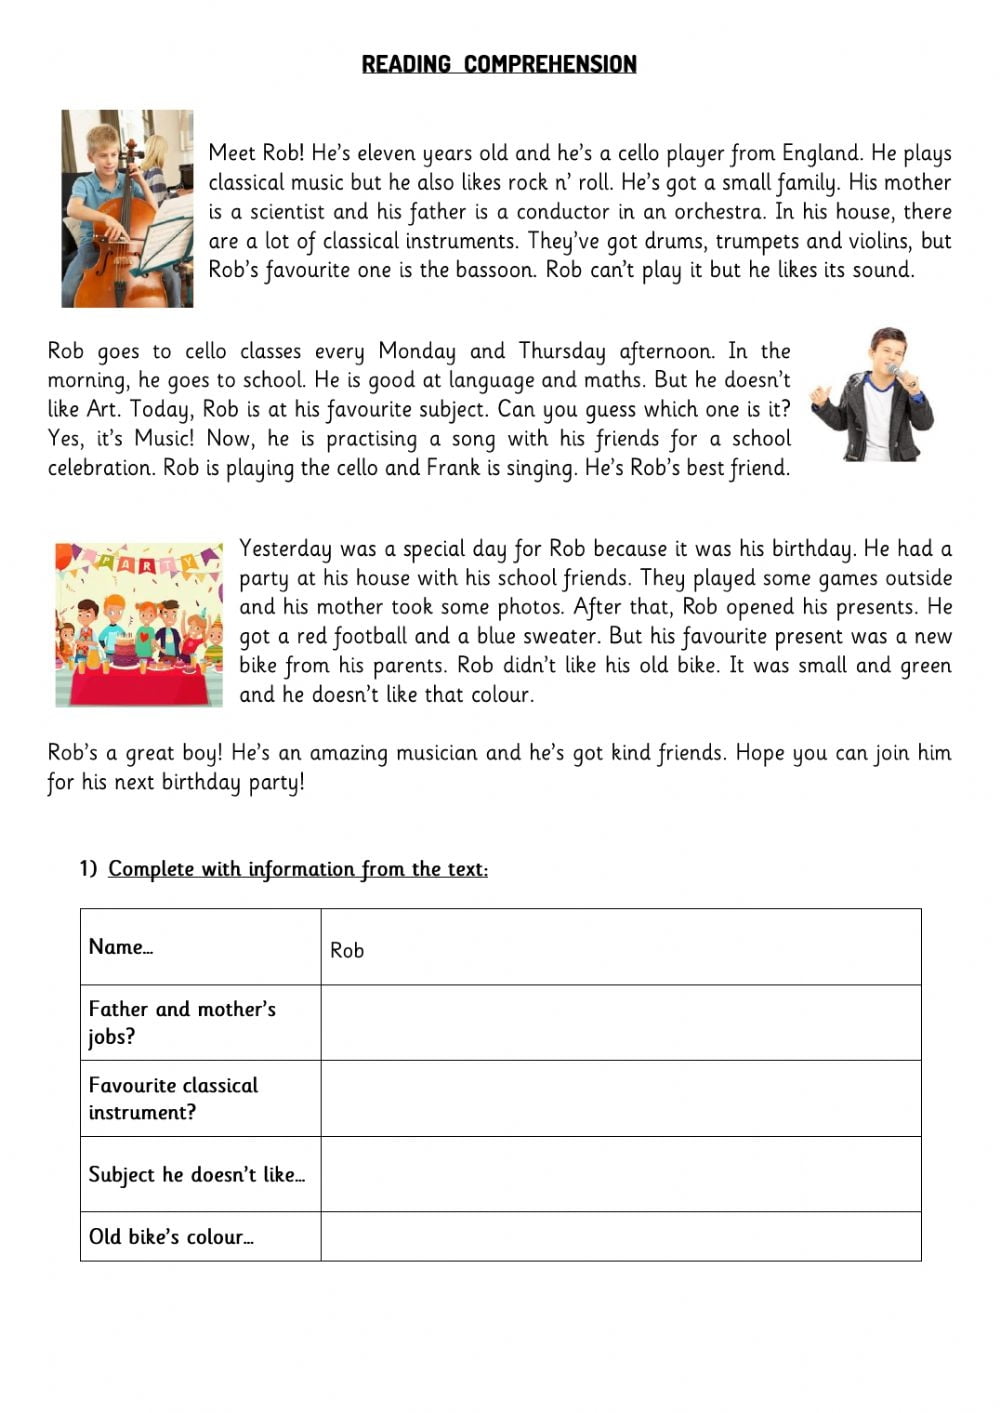 Reading Comprehension Worksheets For 4th Graders